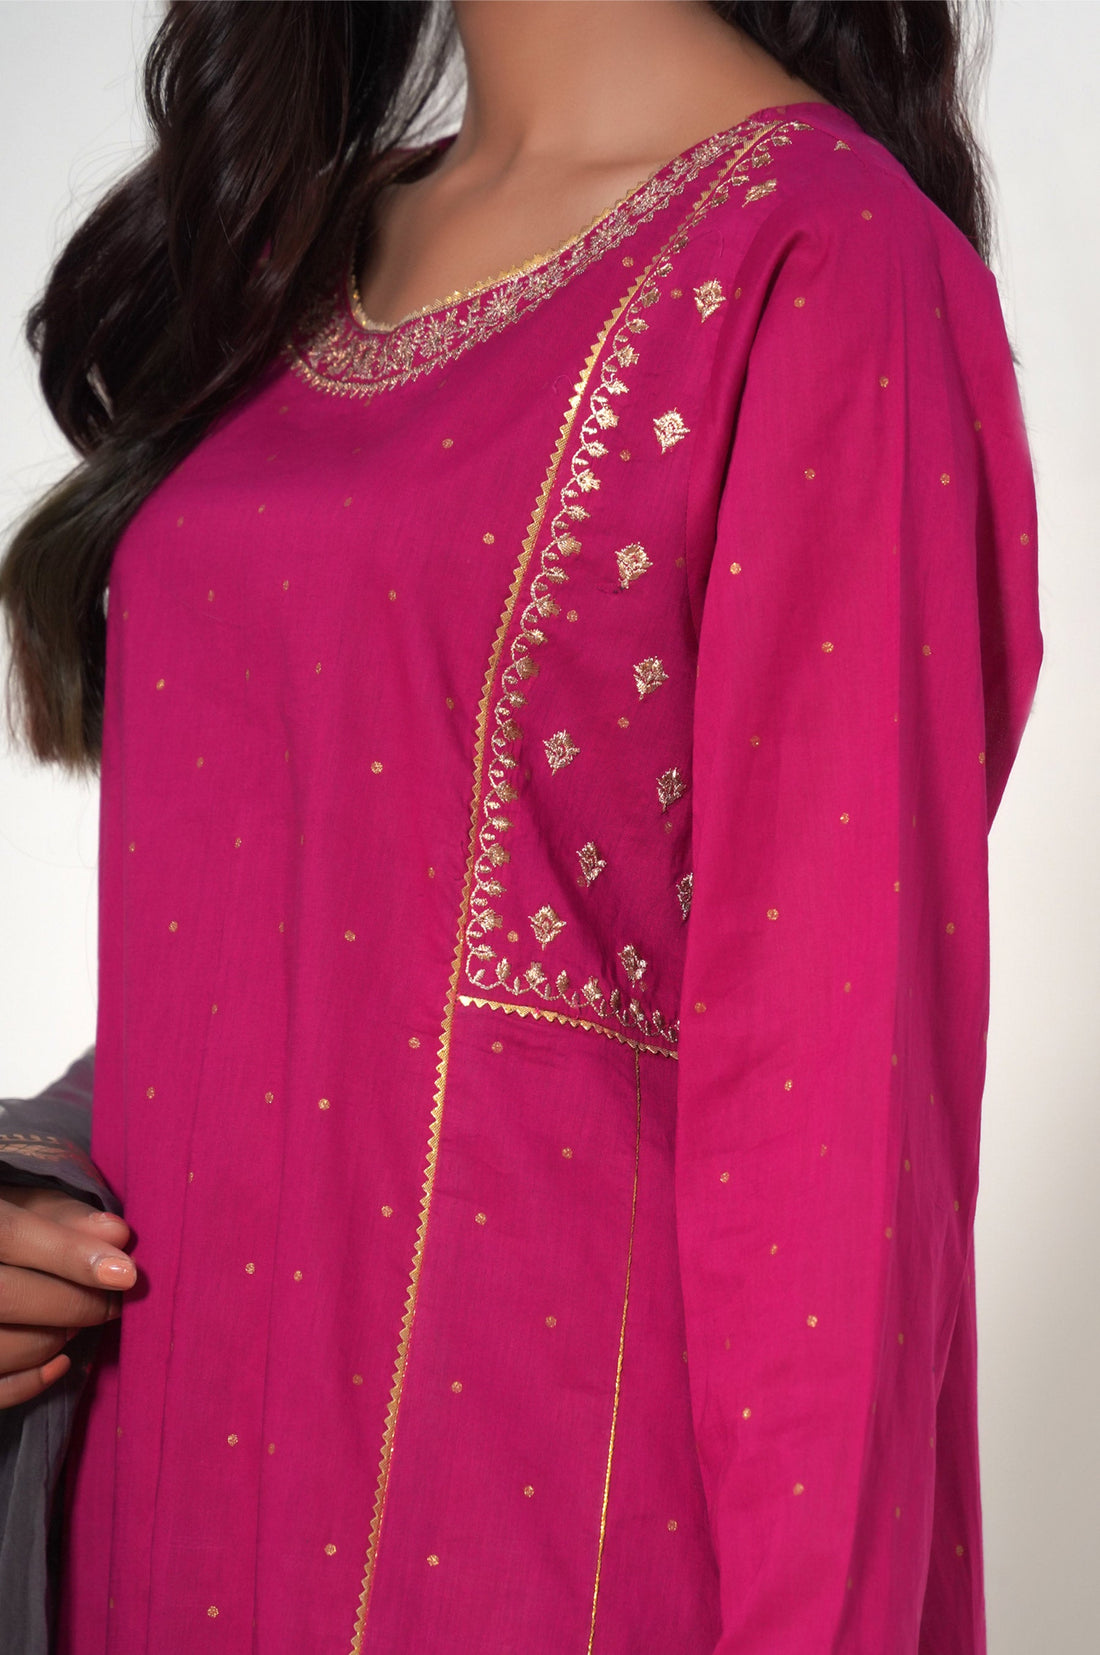 Zeen | Summer Collection 24 | 33460 - Khanumjan  Pakistani Clothes and Designer Dresses in UK, USA 